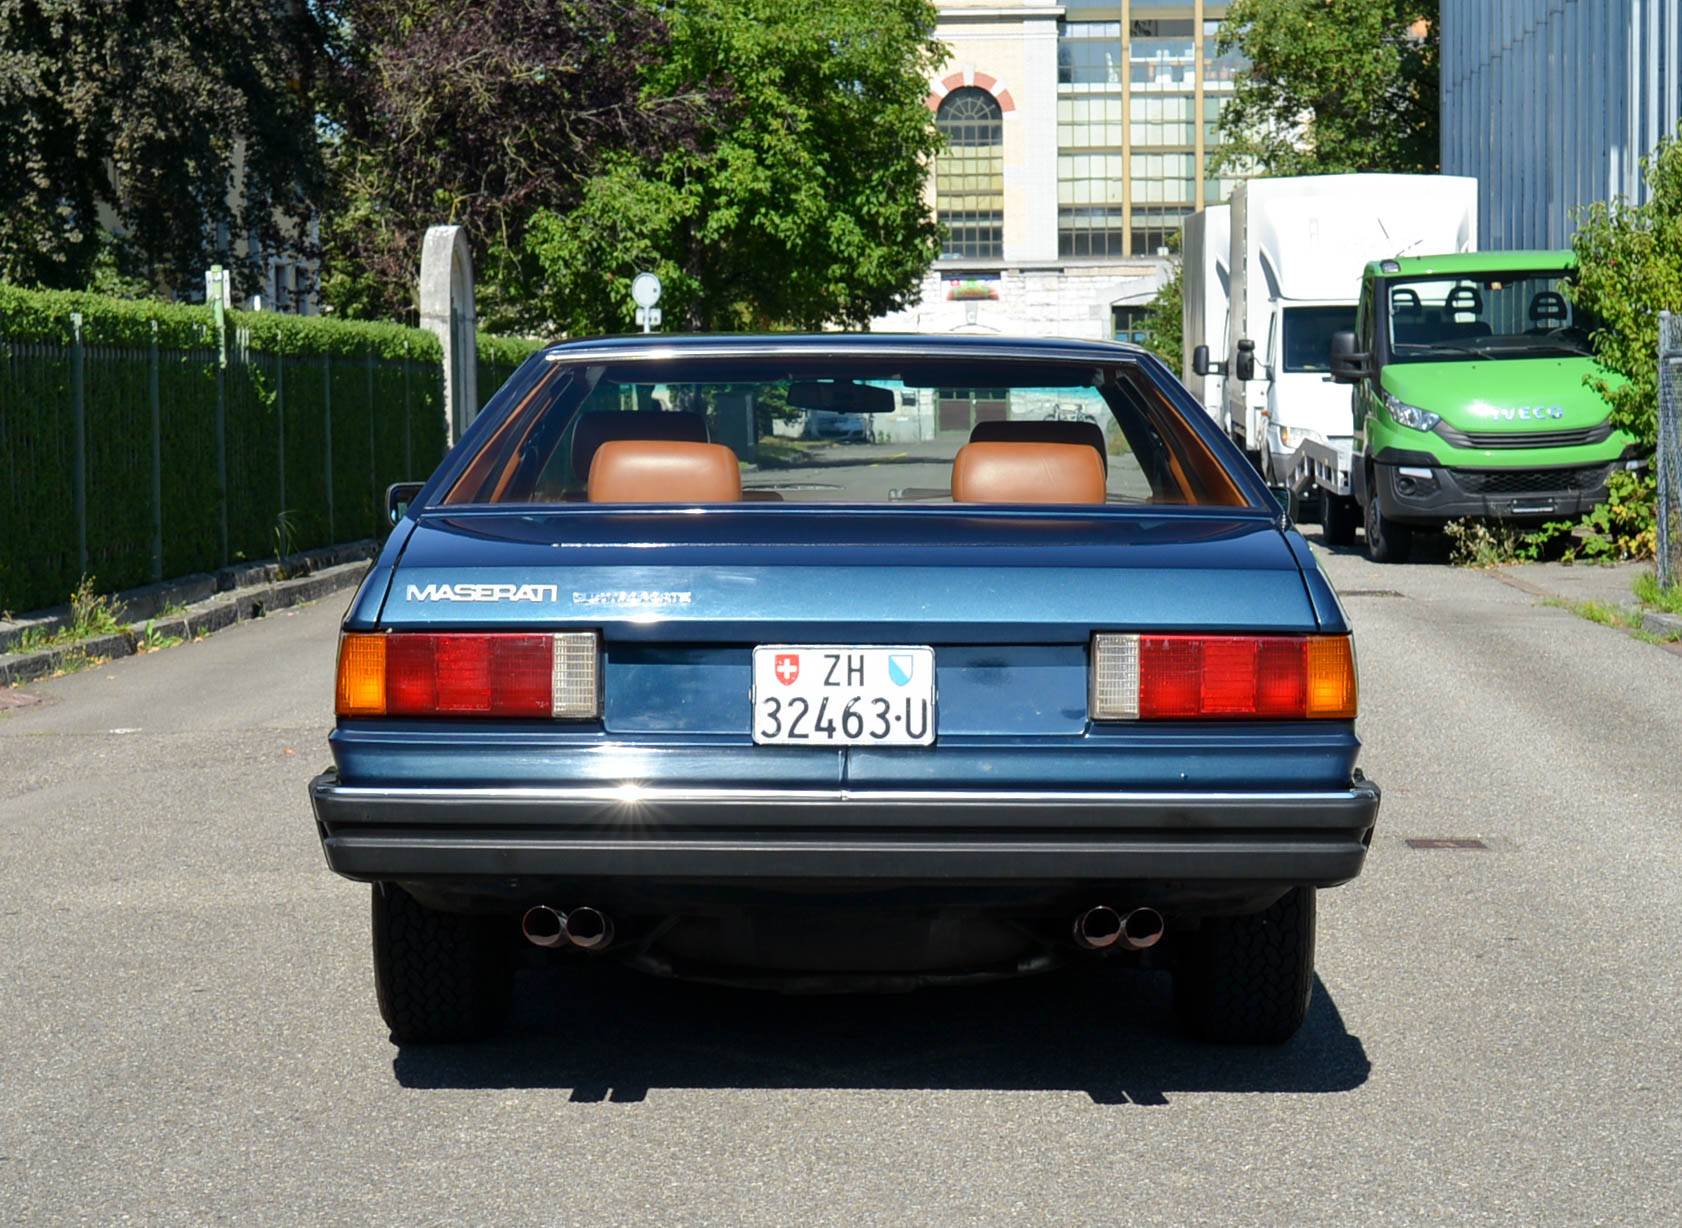 For Sale: Maserati Quattroporte 4900 (1984) offered for ...